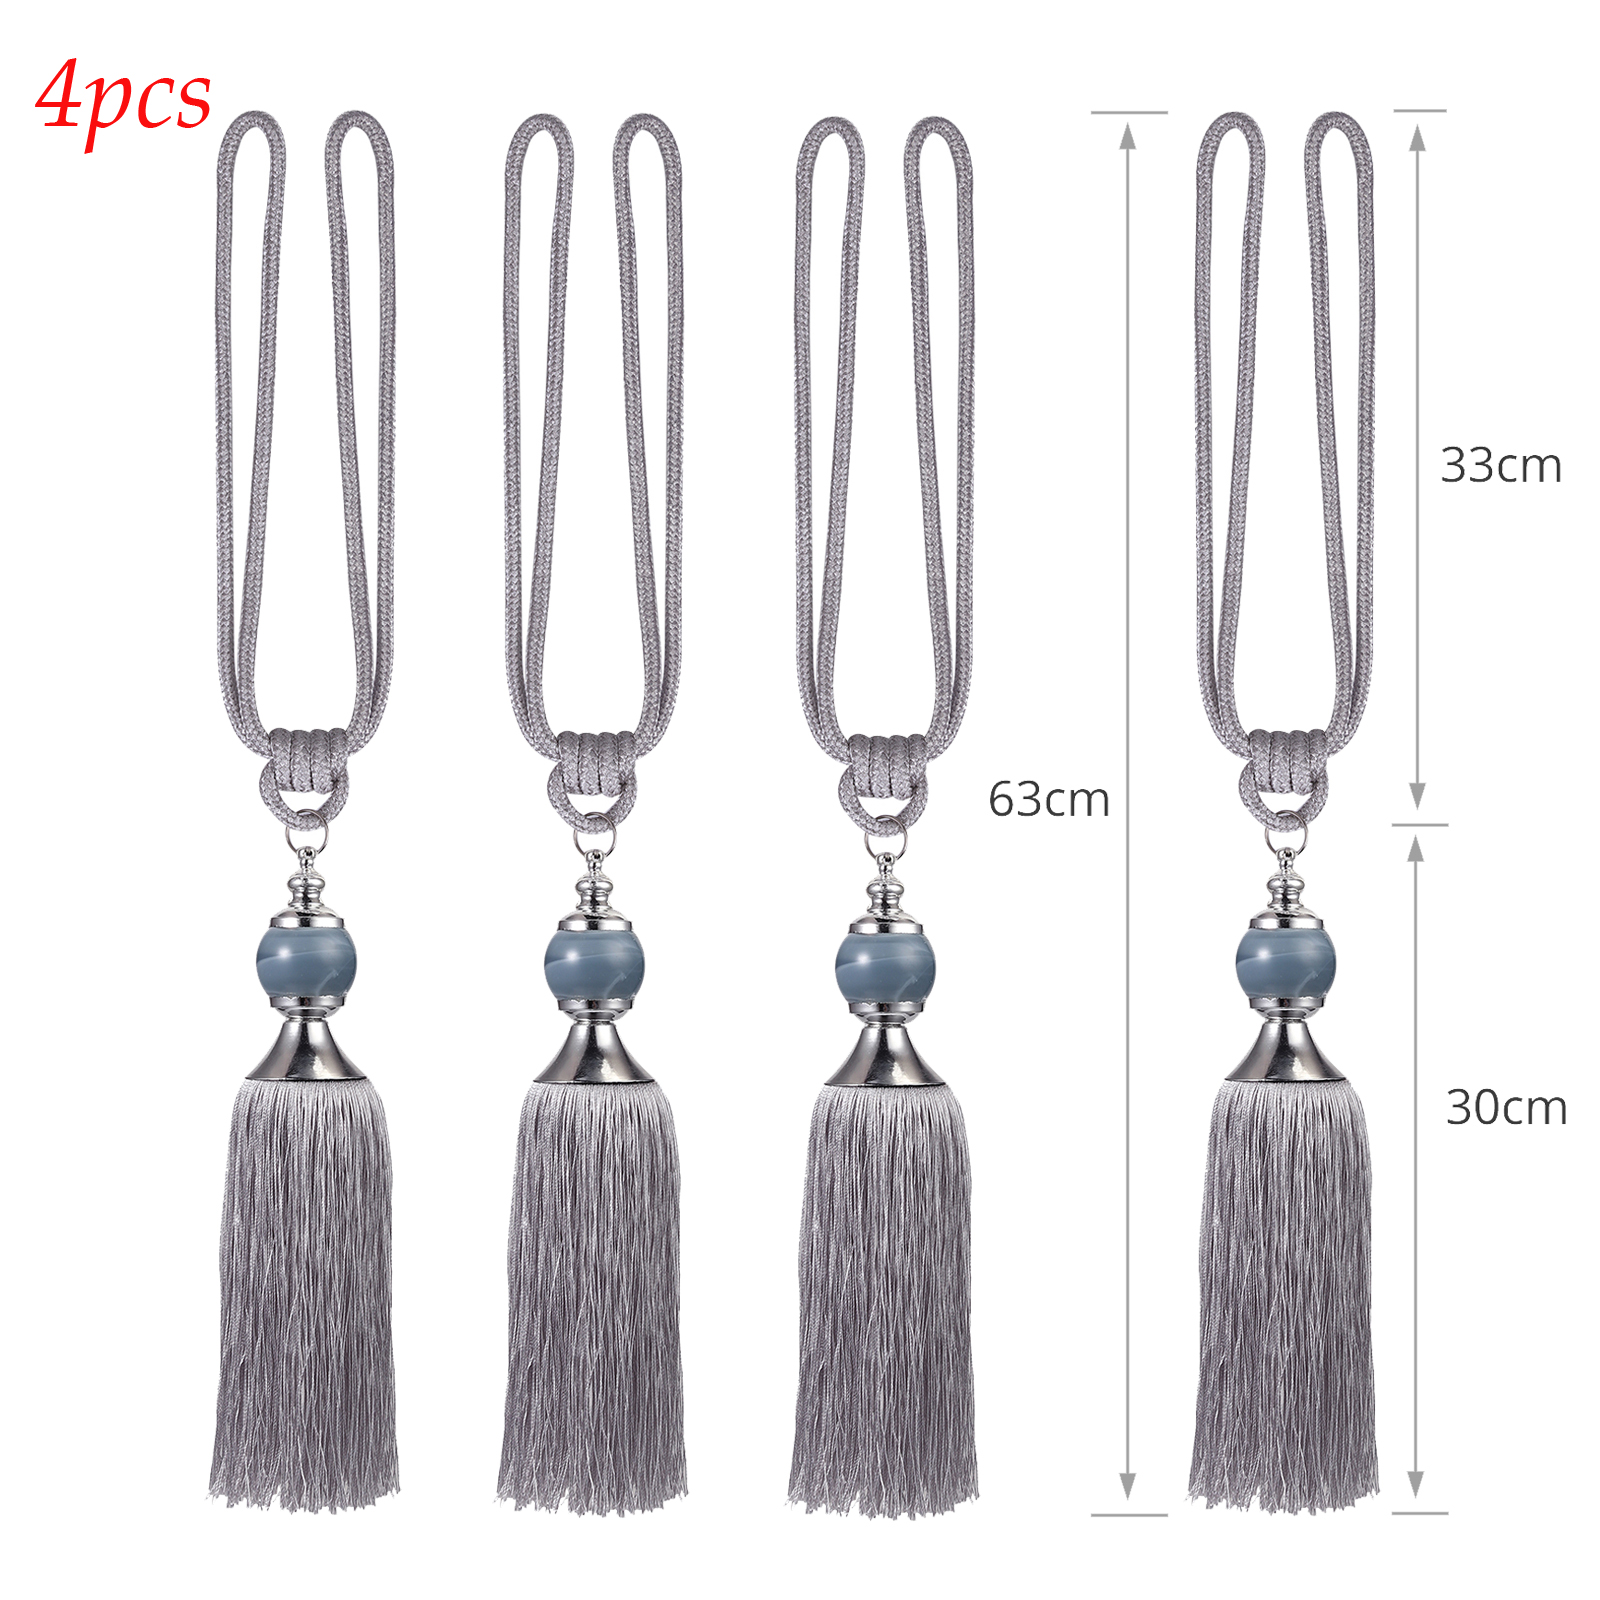 2× Crystal Curtain Holdback Wall Tie Backs Hooks Hanger Holder YY Silver Metal 